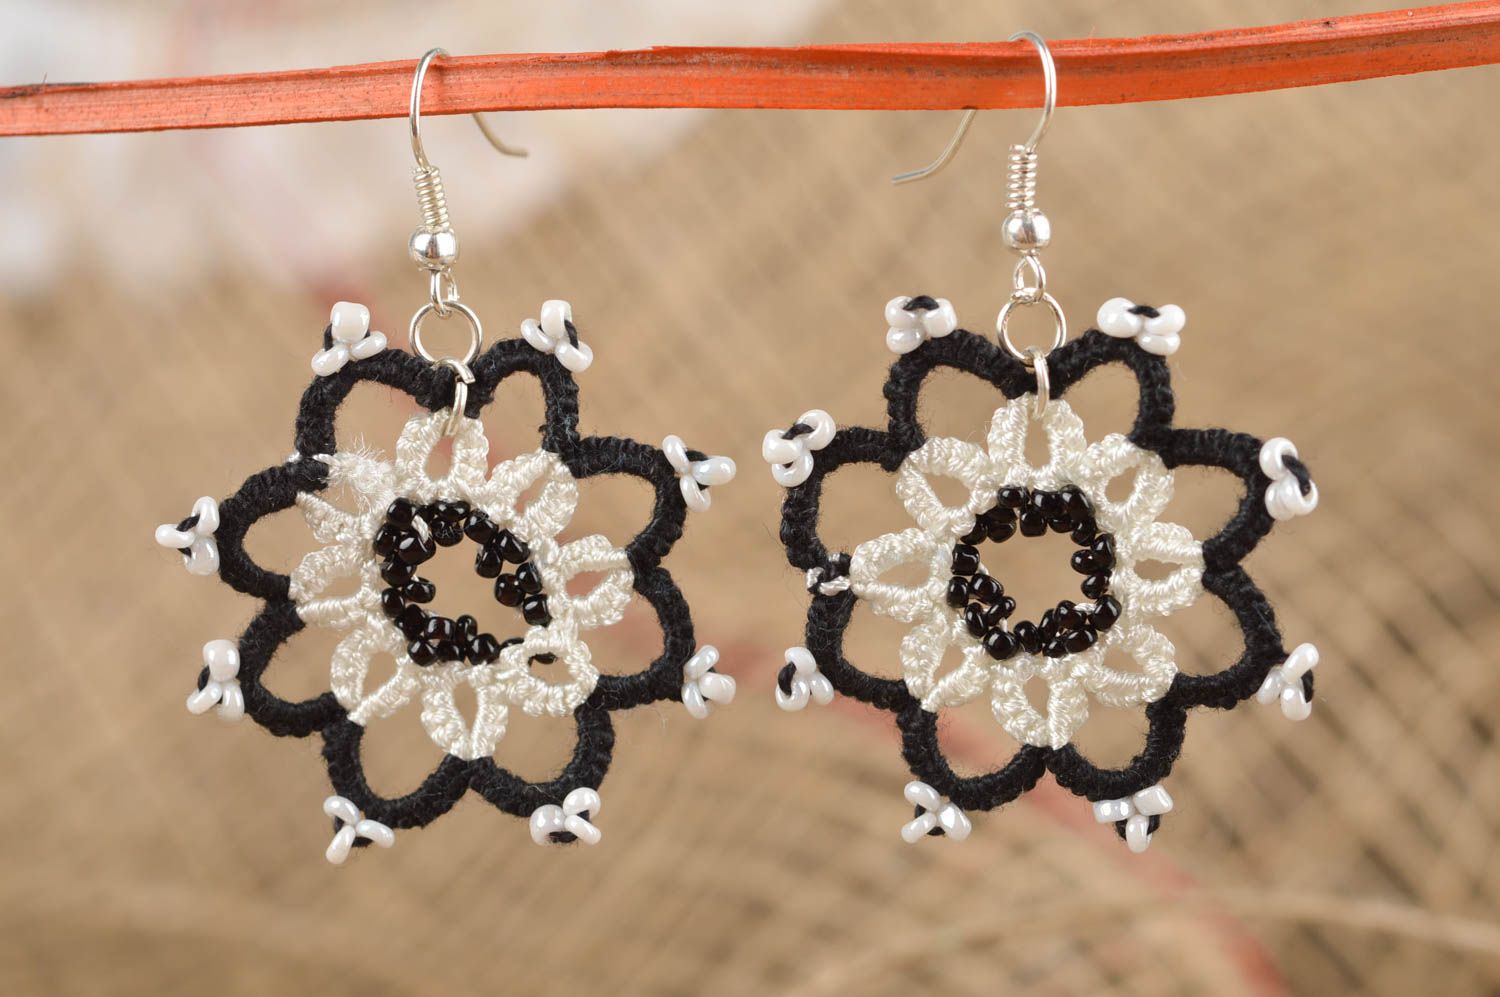 Handmade beaded earrings woven lace earrings textile jewelry designs gift ideas photo 1